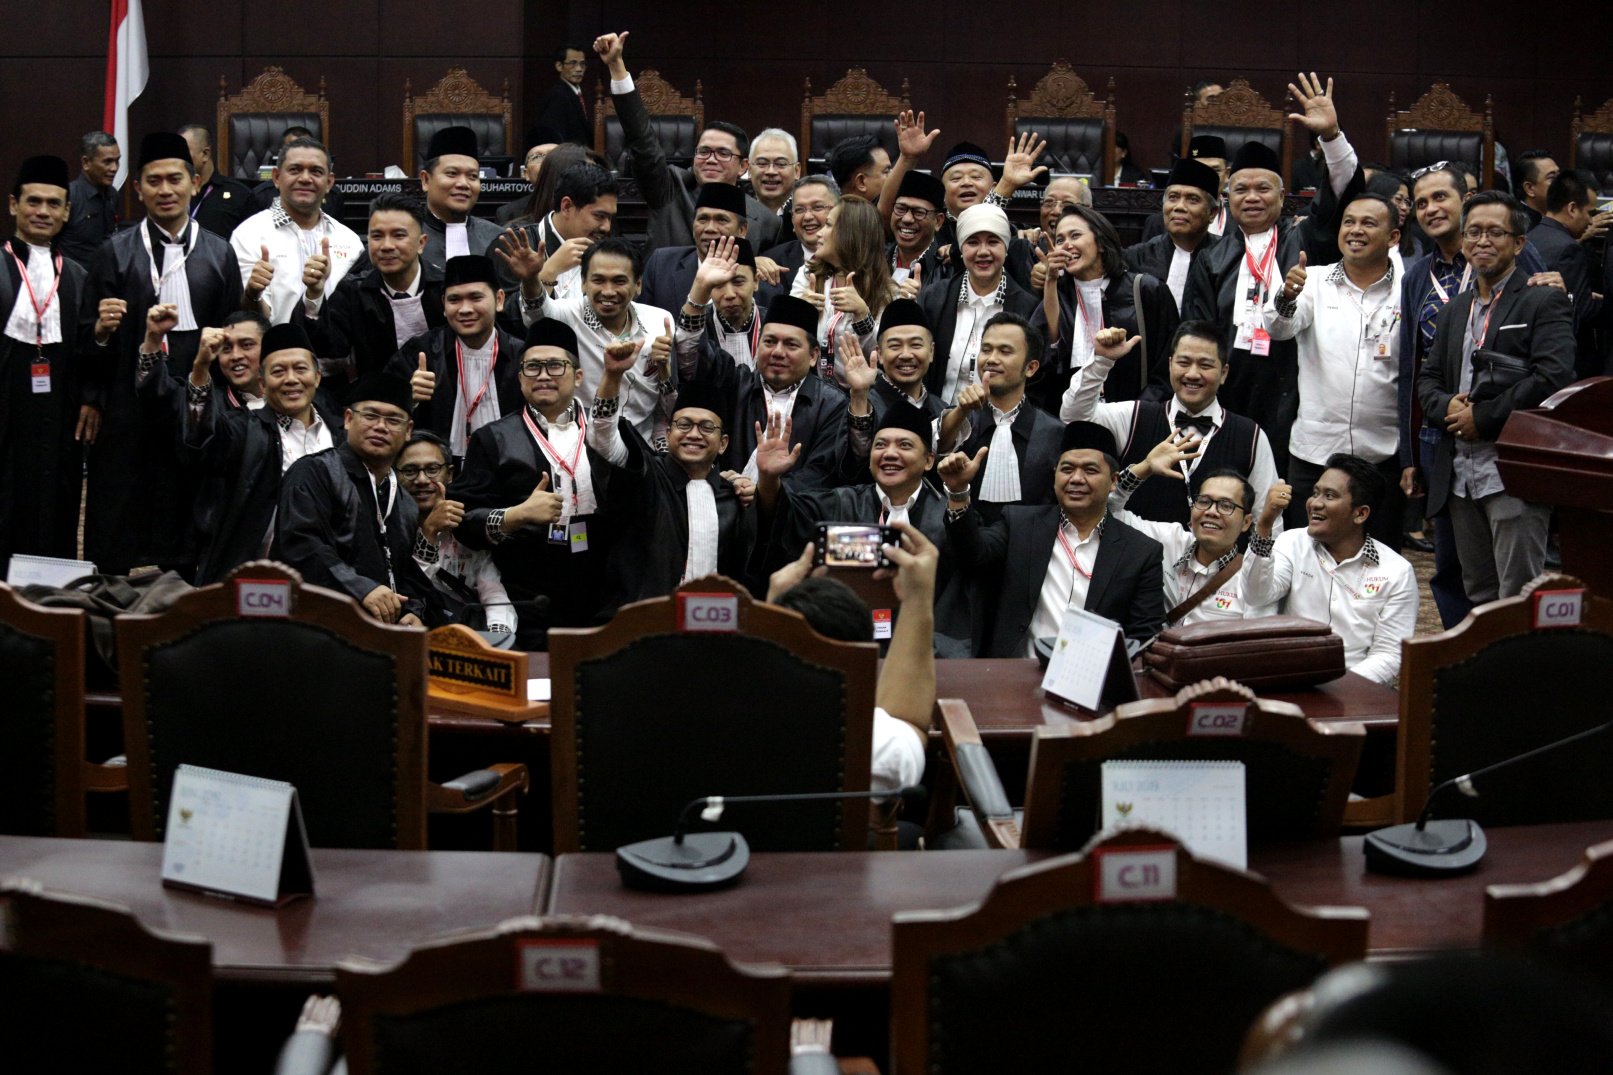 Euforia TKN selaku kuasa hukum paslon 01 seusai pembacaan putusan sidang sengketa Pilpres 2019, Mahkamah Konstitusi, Jakarta Pusat (27/6). Mahkamah Konstitusi (MK) menolak seluruh permohonan yang diajukan Prabowo-Sandi dalam sengketa pilpres.